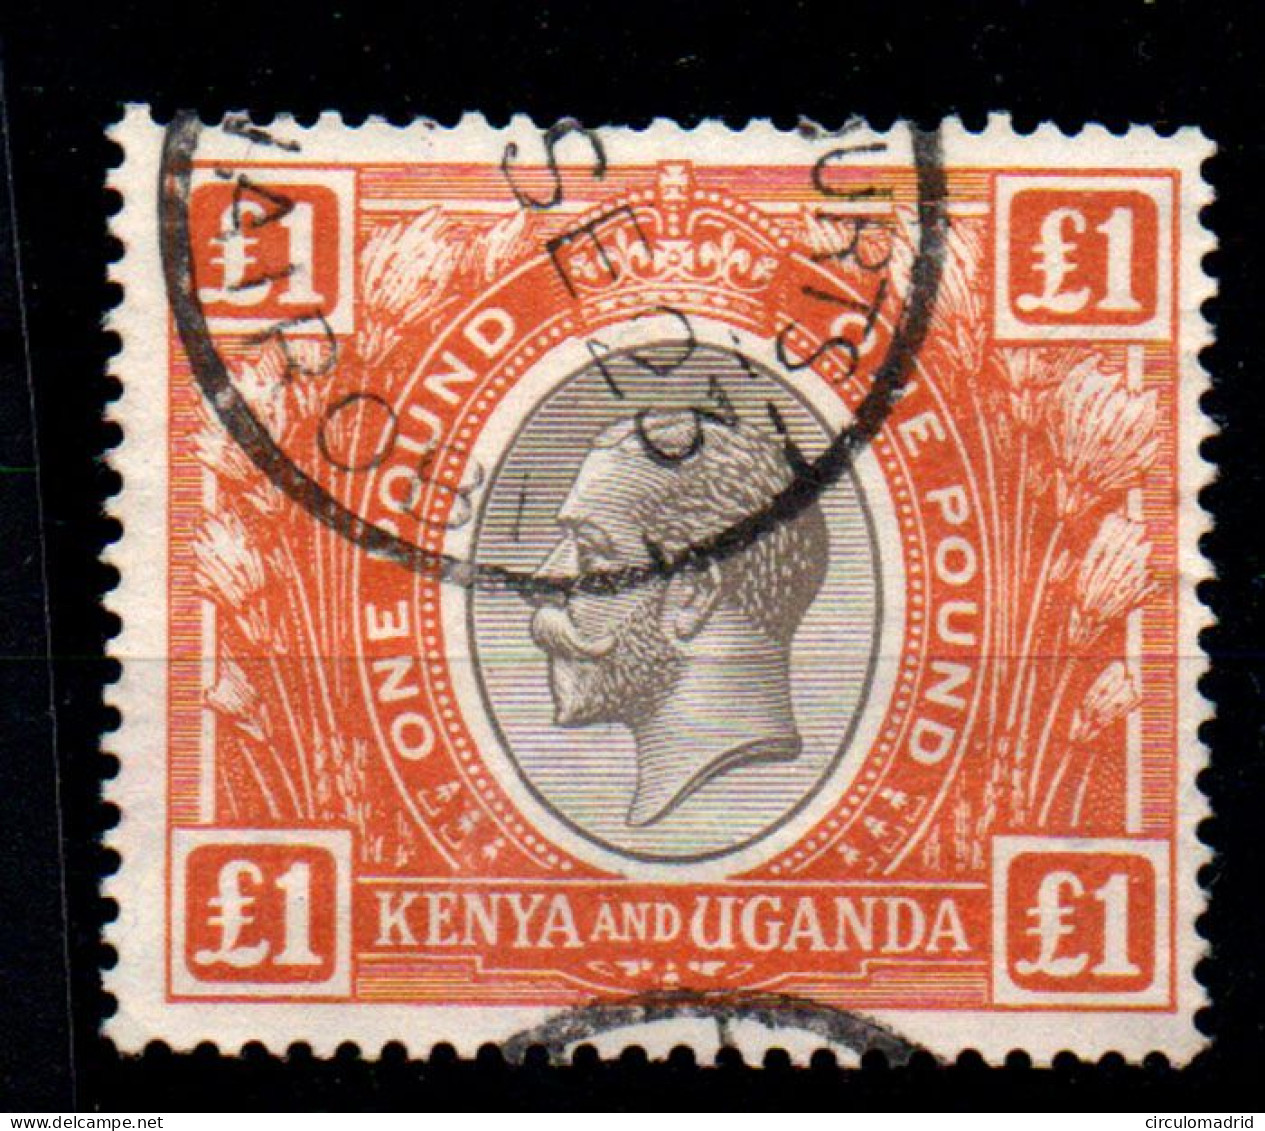 Kenya Y Uganda Nº 18. Año 1922/27 - Kenya & Ouganda